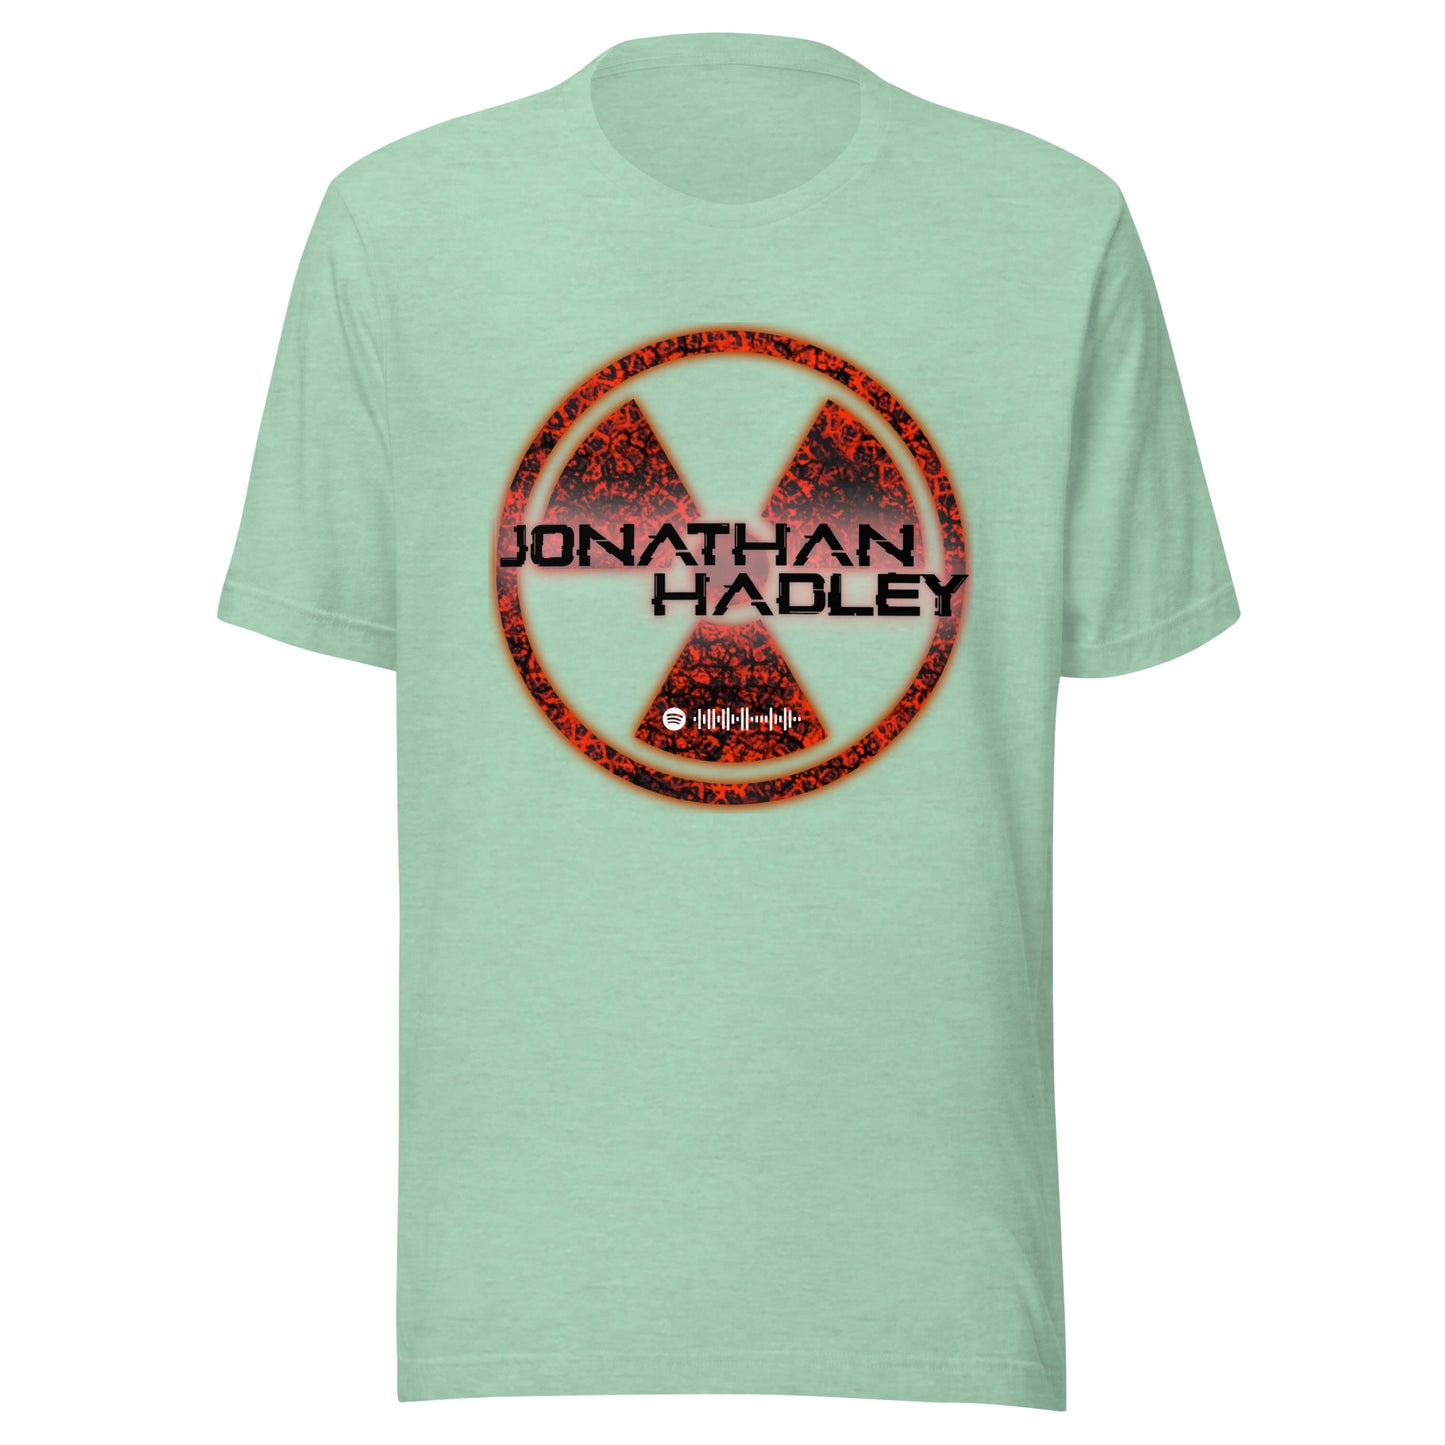 Jonathan Hadley Radiation T-Shirt